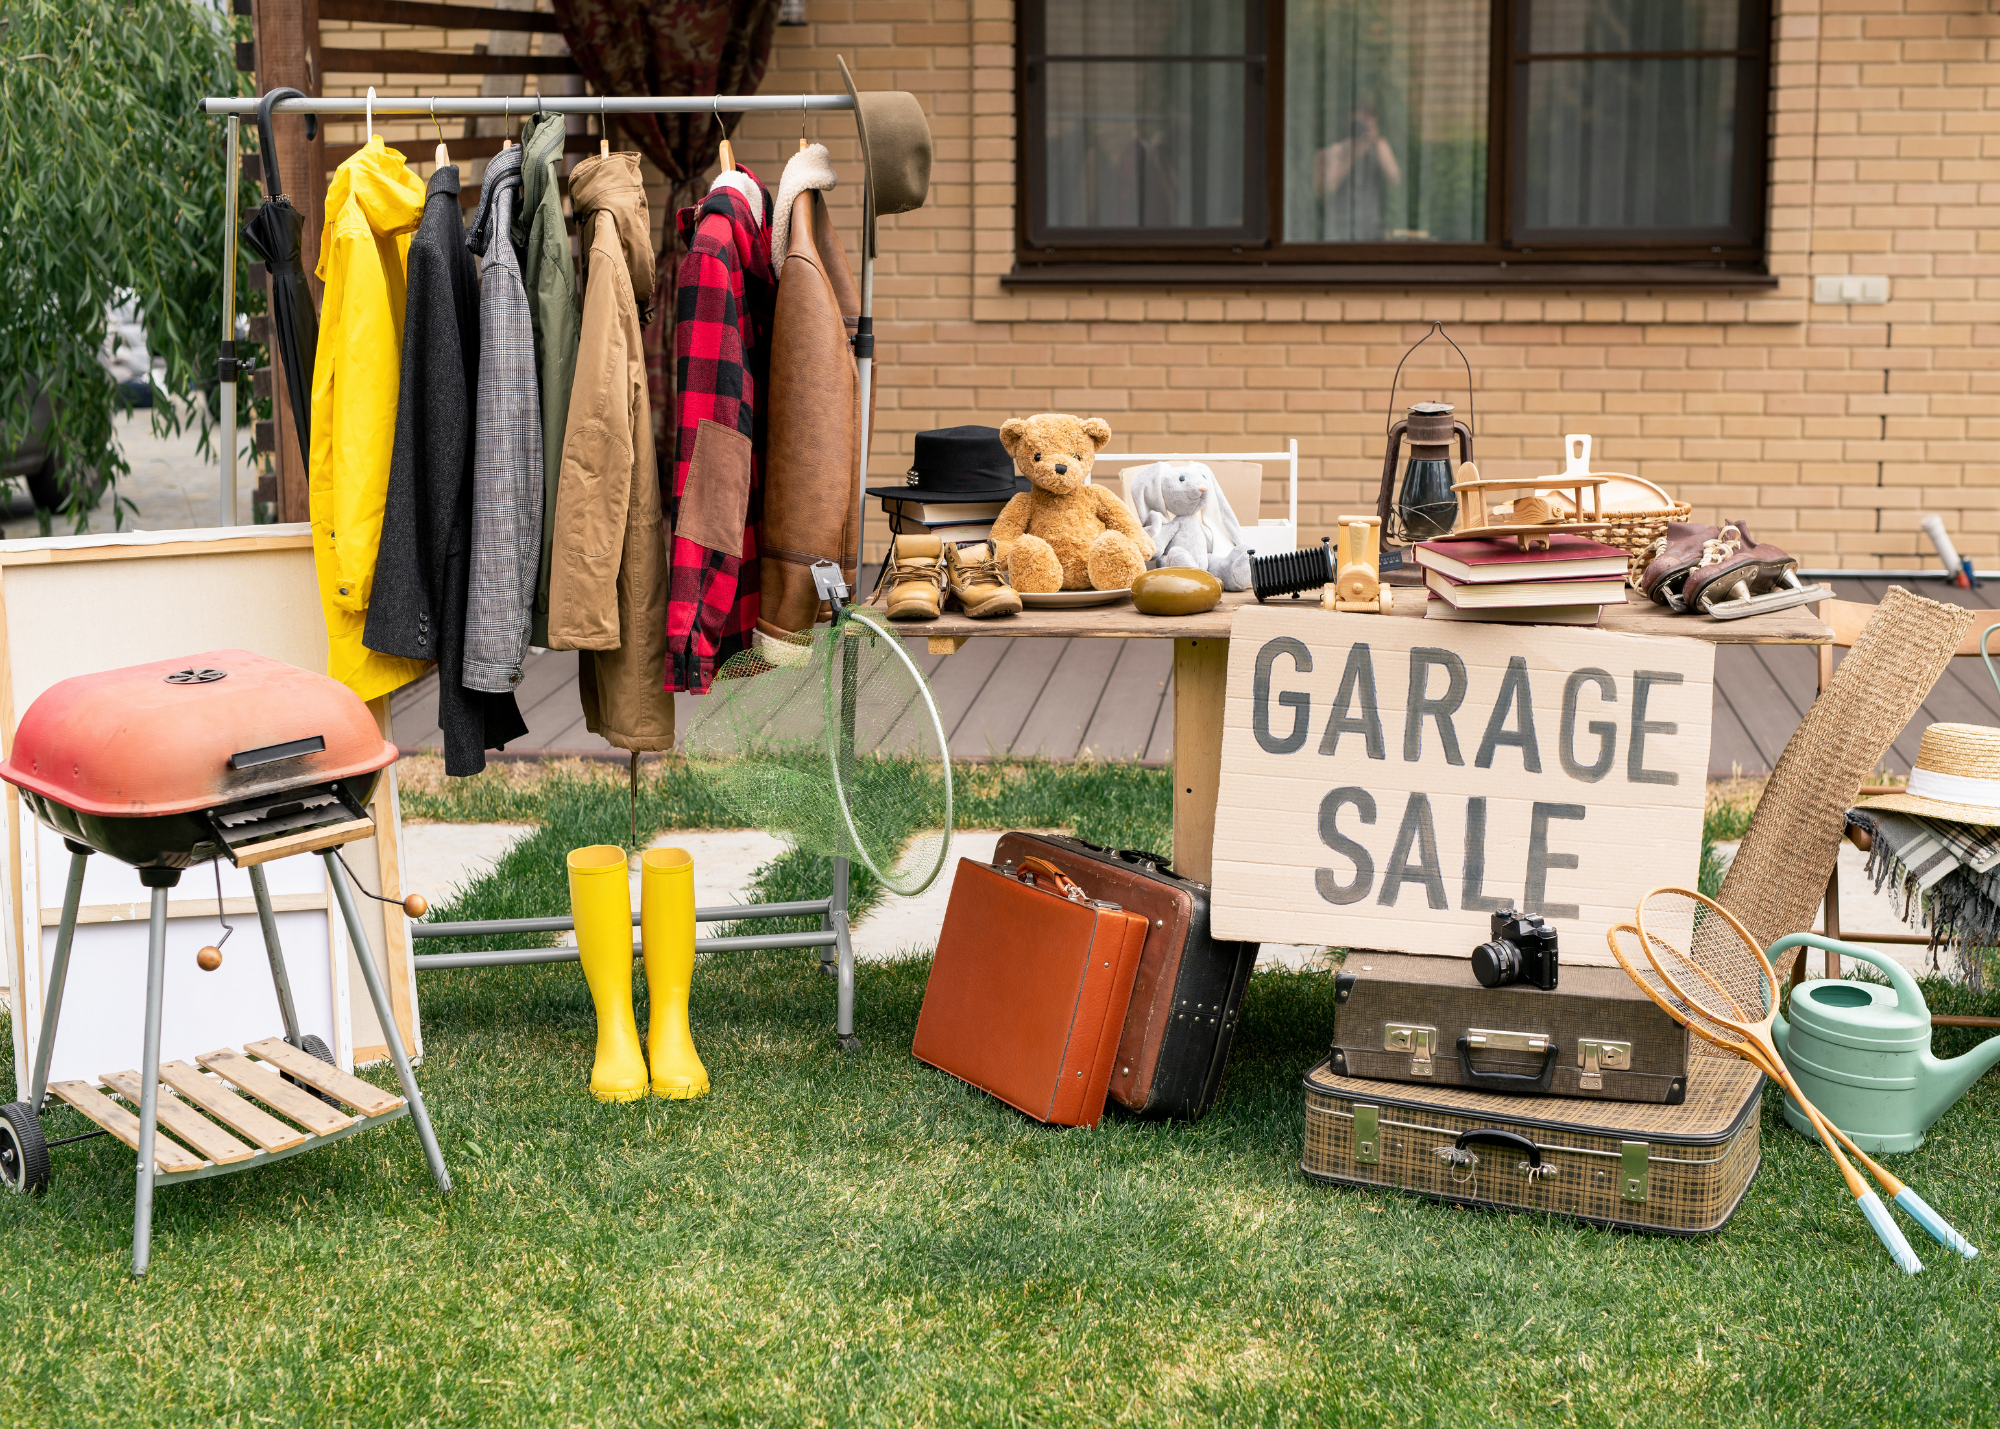 What is a Garage Sale?